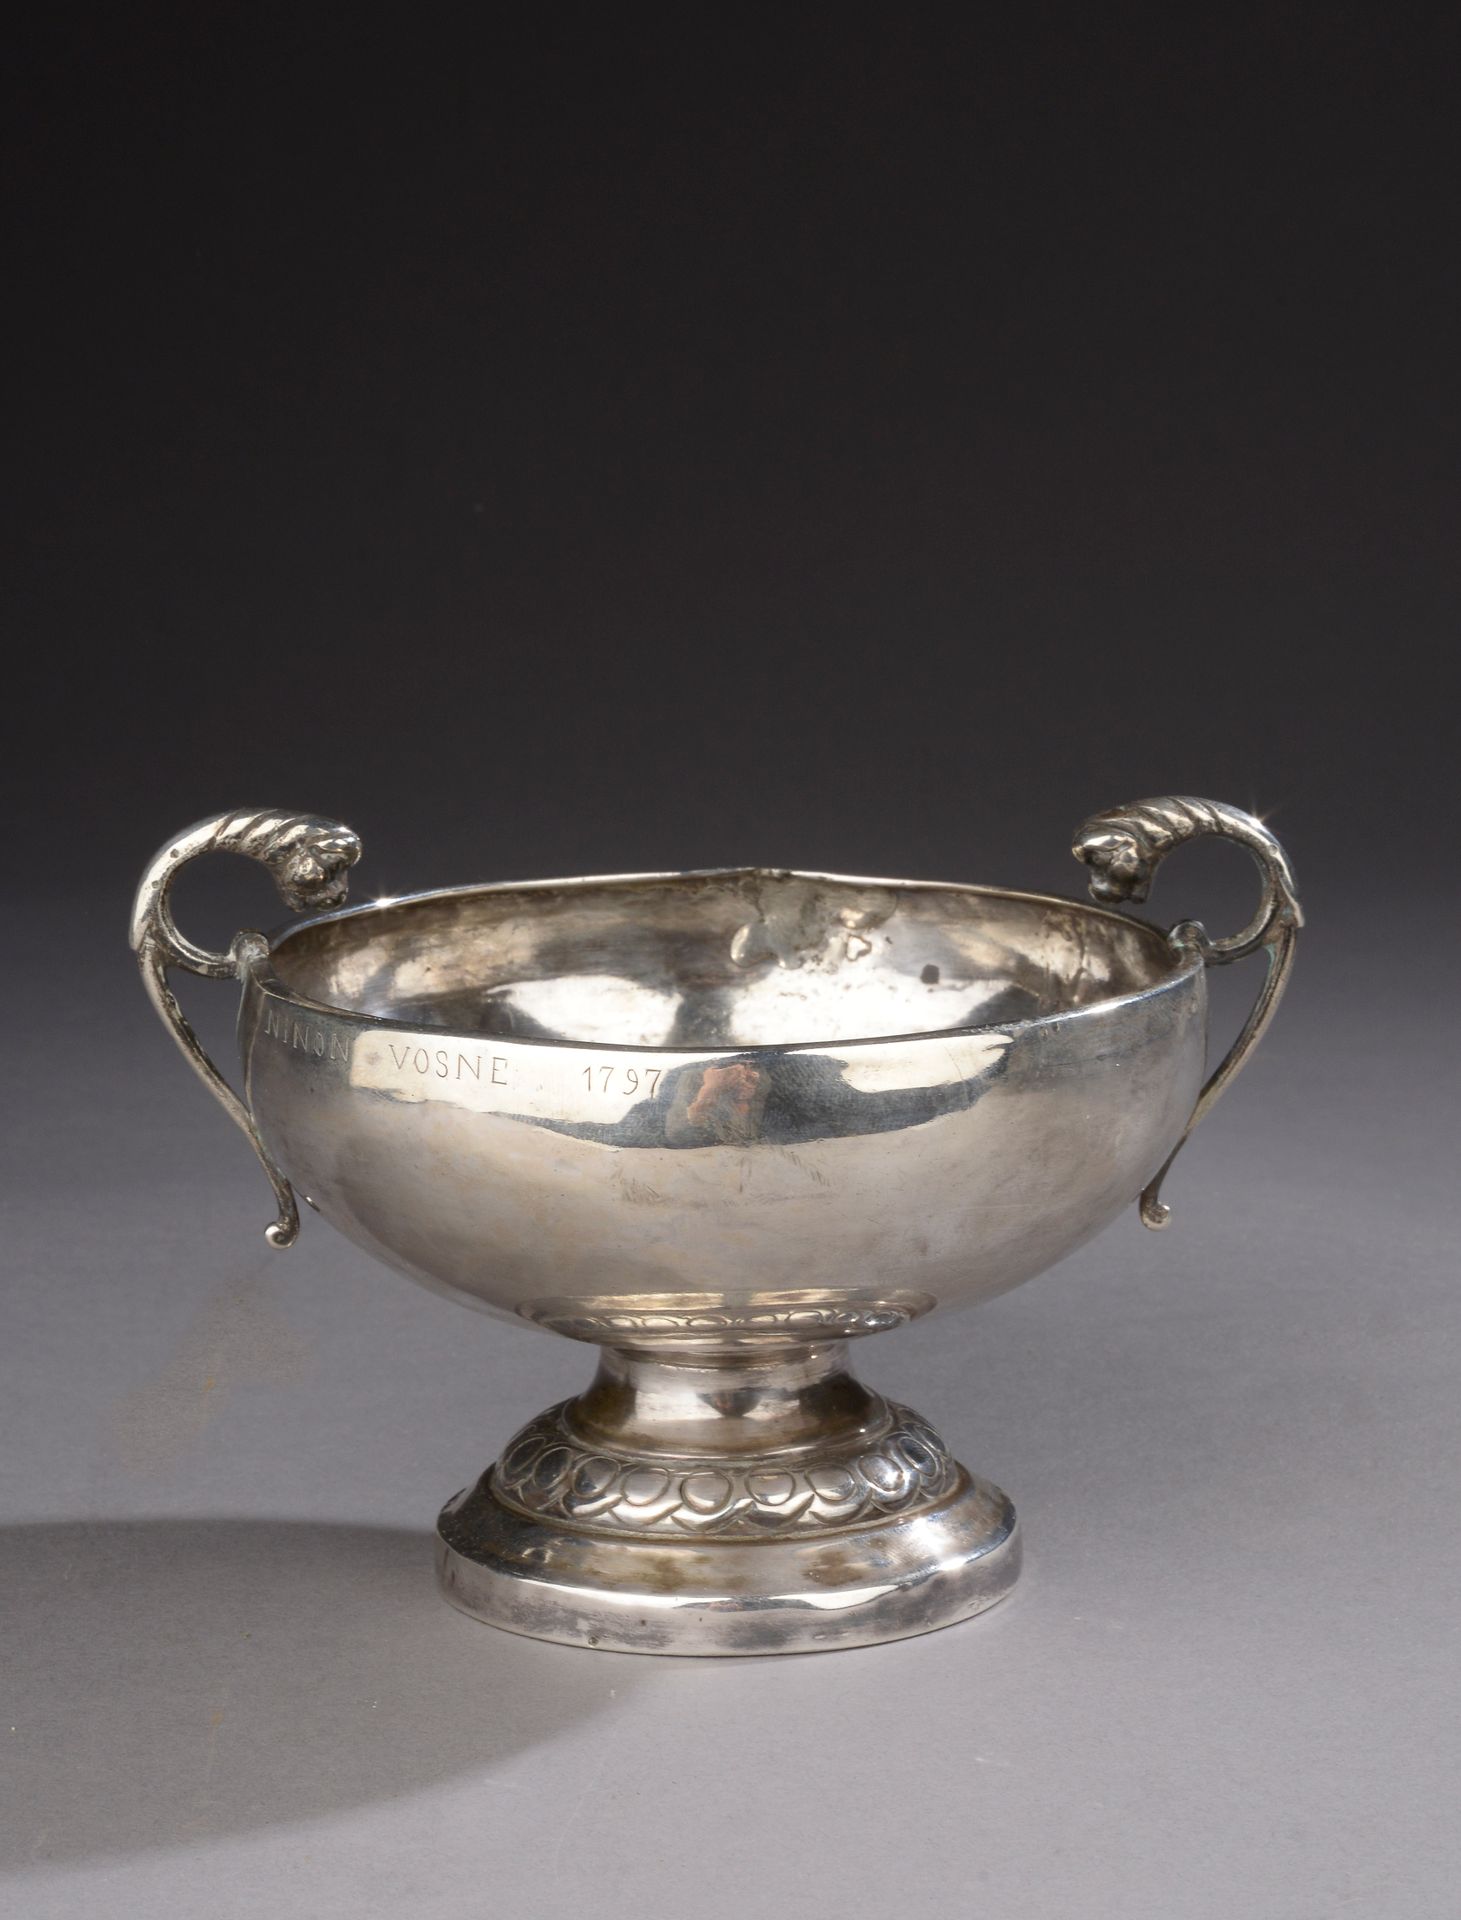 Null 银质婚礼杯95万分之一，底部刻有交错的图案，把手影响到狮子头的形状，杯身刻有 "NINON VOSNE 1797"。

18世纪。

高度：8.5厘米&hellip;